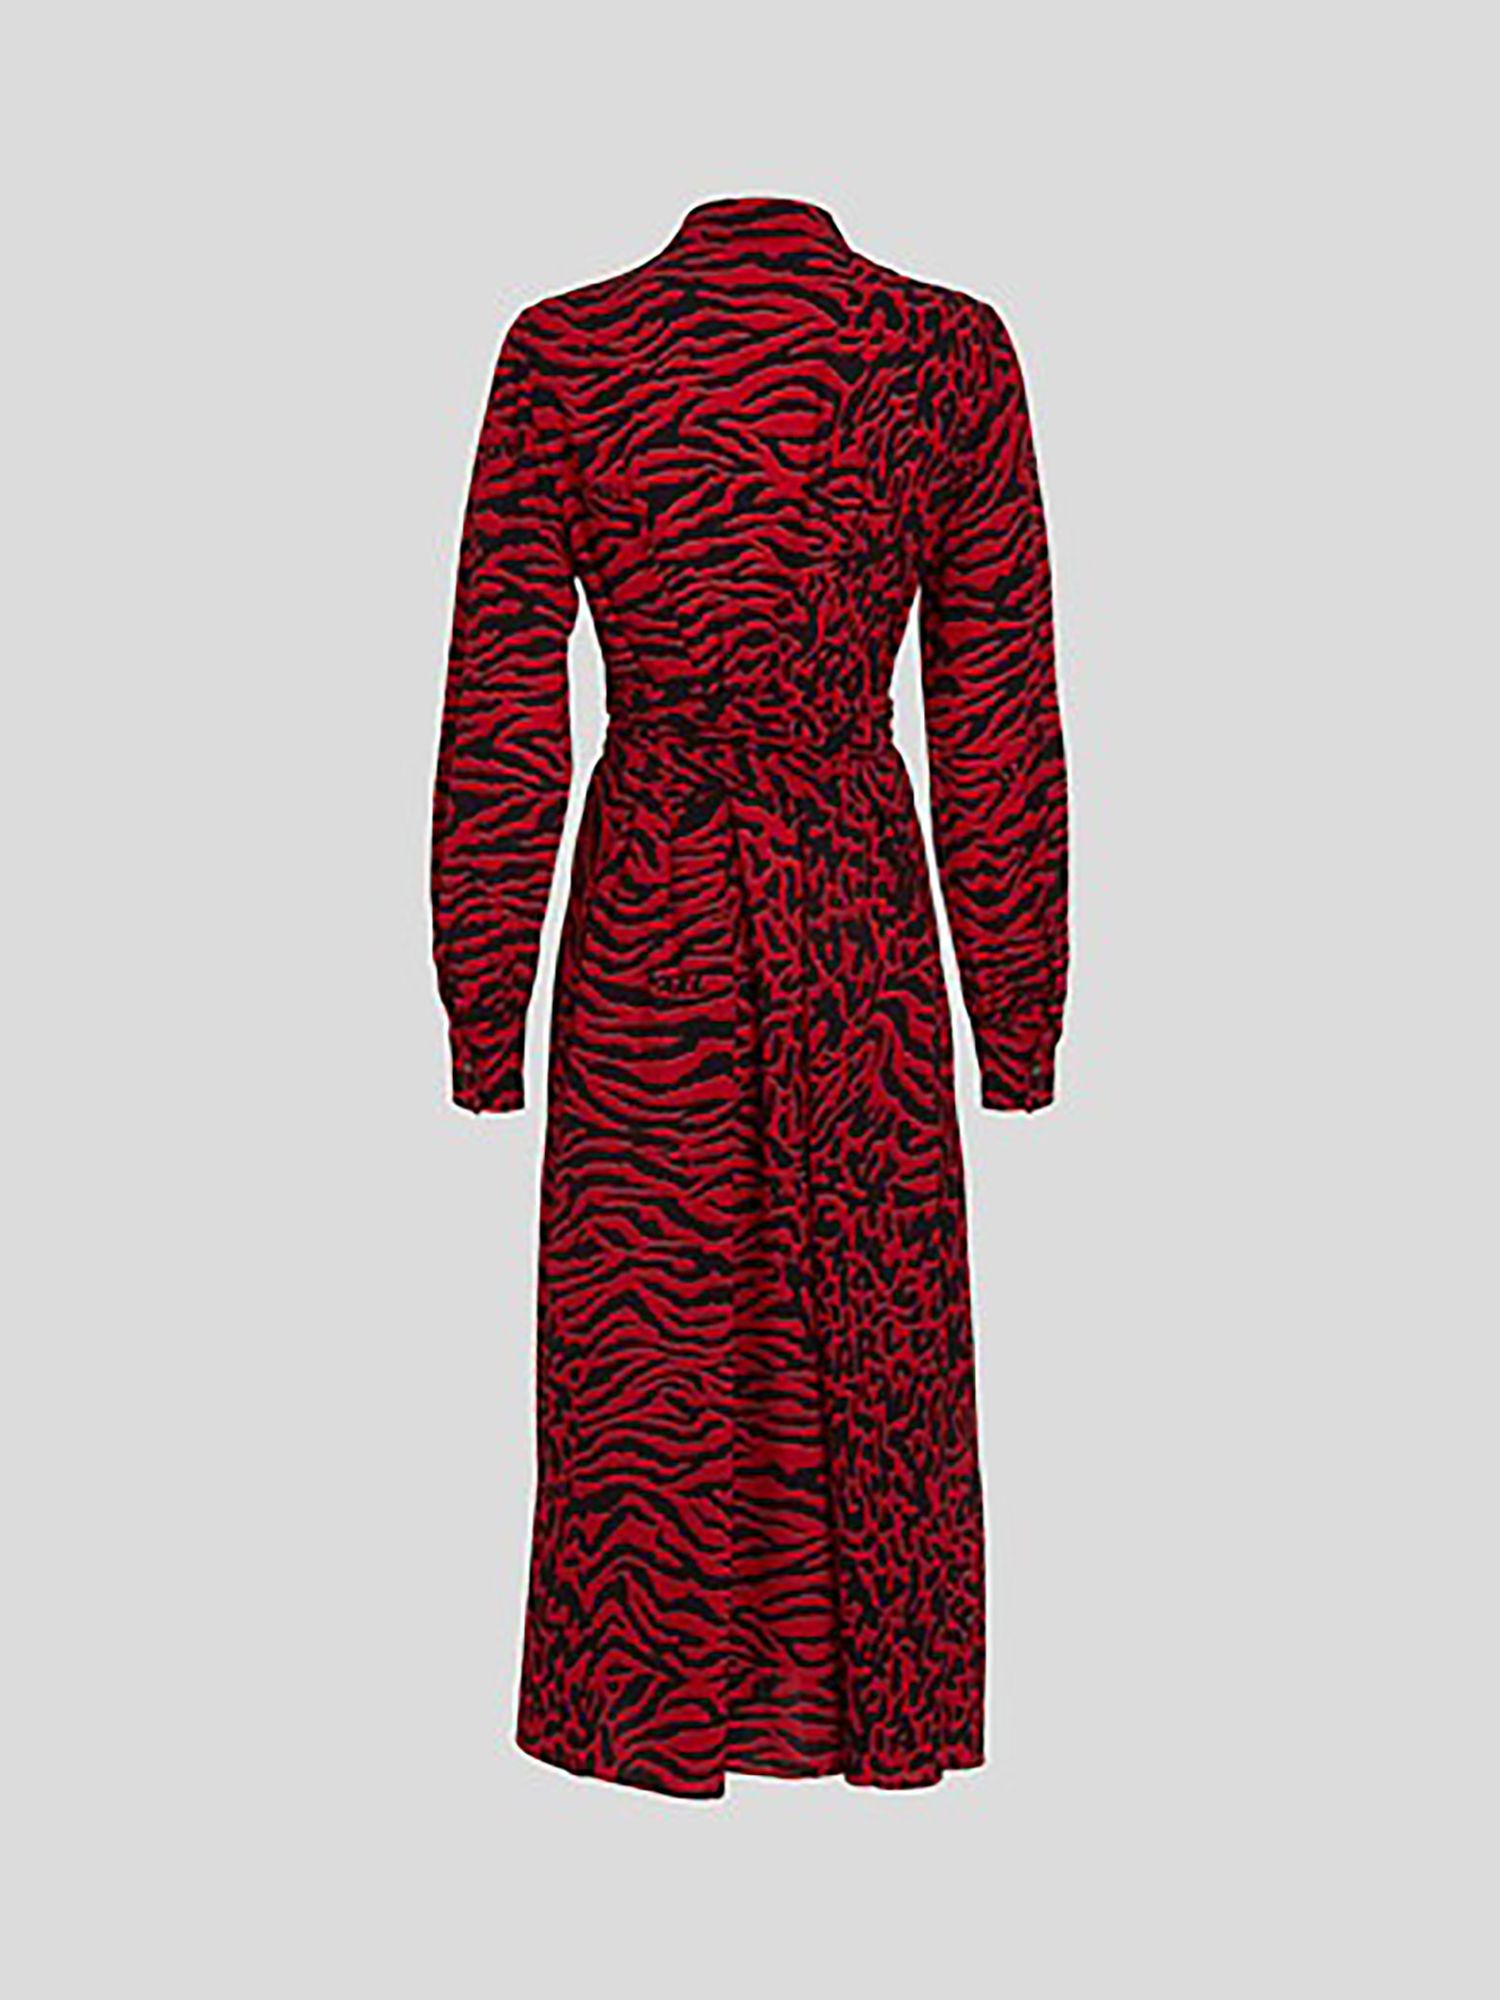 KARL LAGERFELD Animal Shirt Dress, Red/Multi, 6